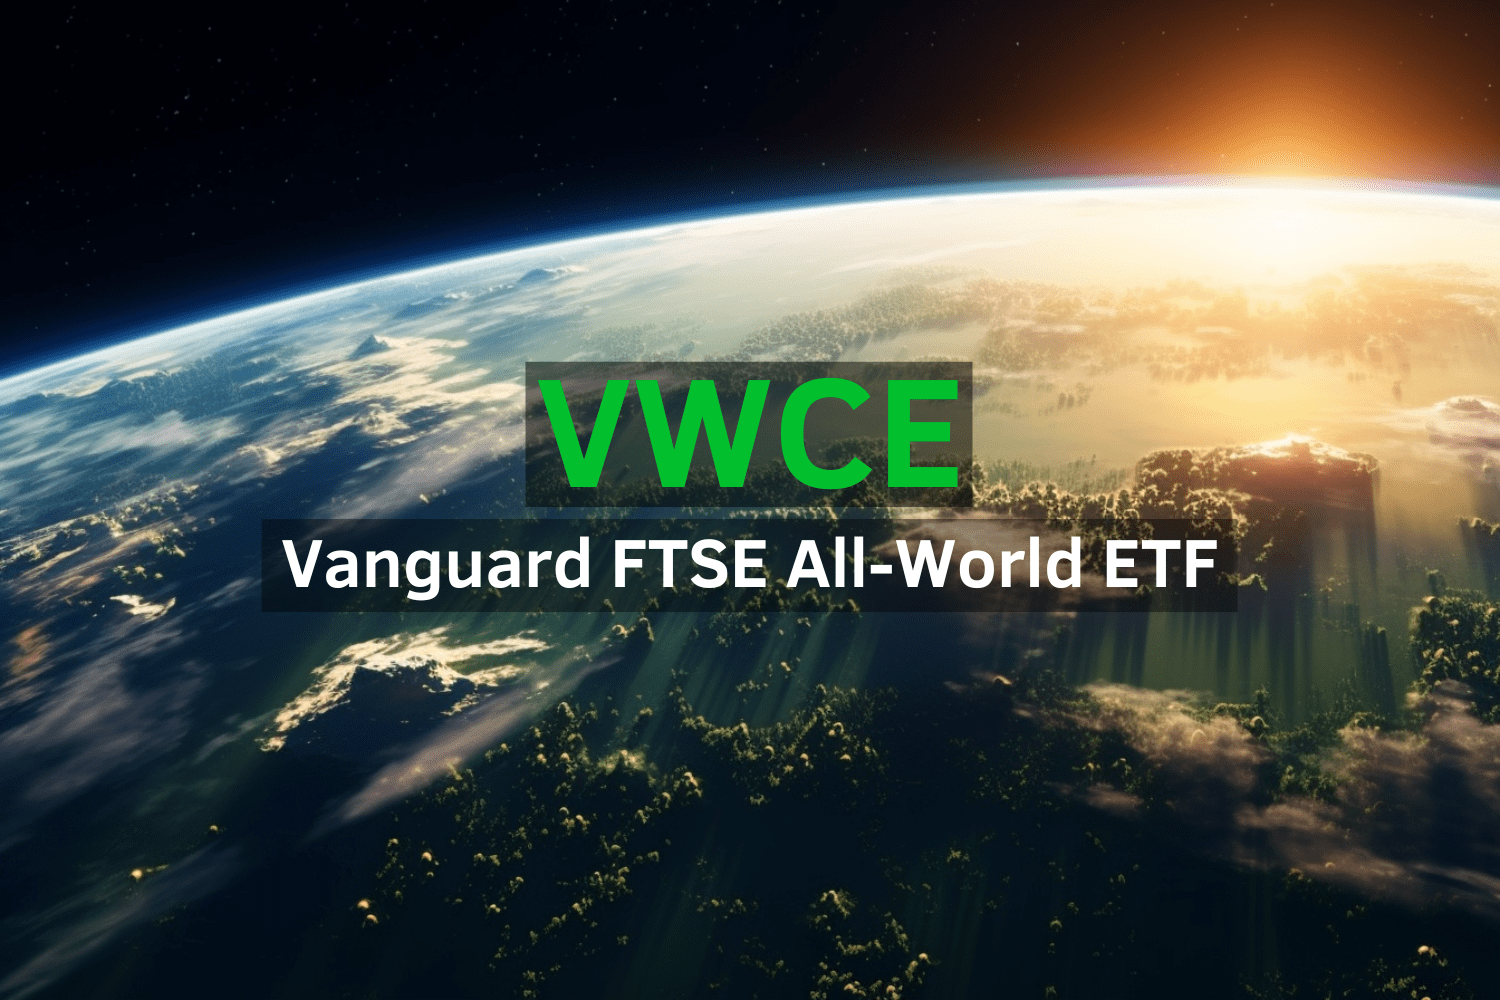 Vanguard FTSE All-World ETF (VWCE)